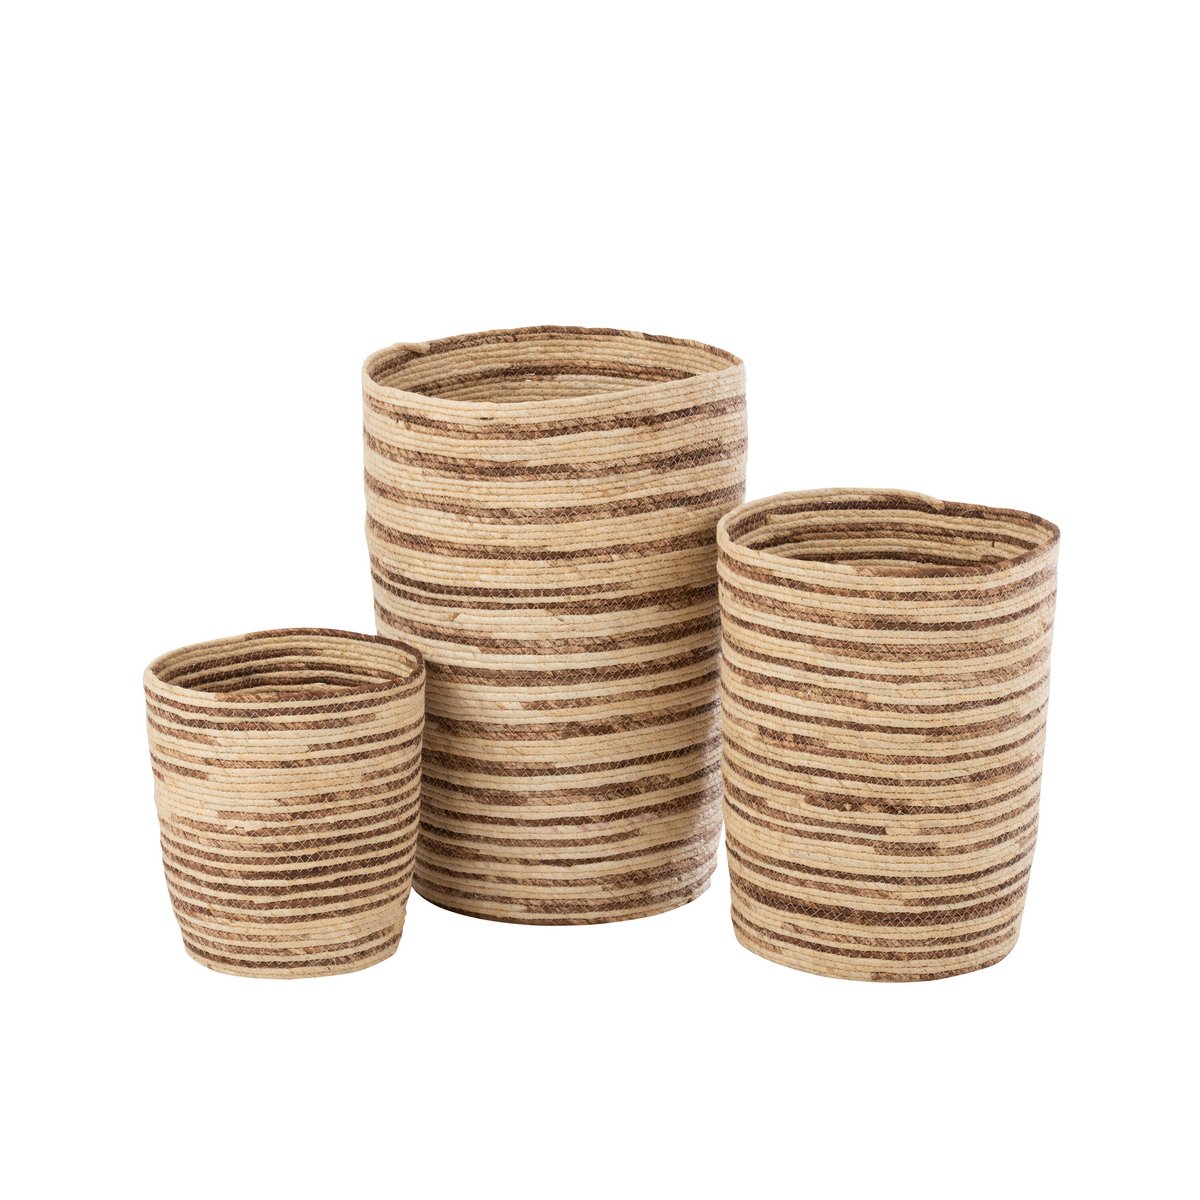 Set of 3 corn baskets, natural brown